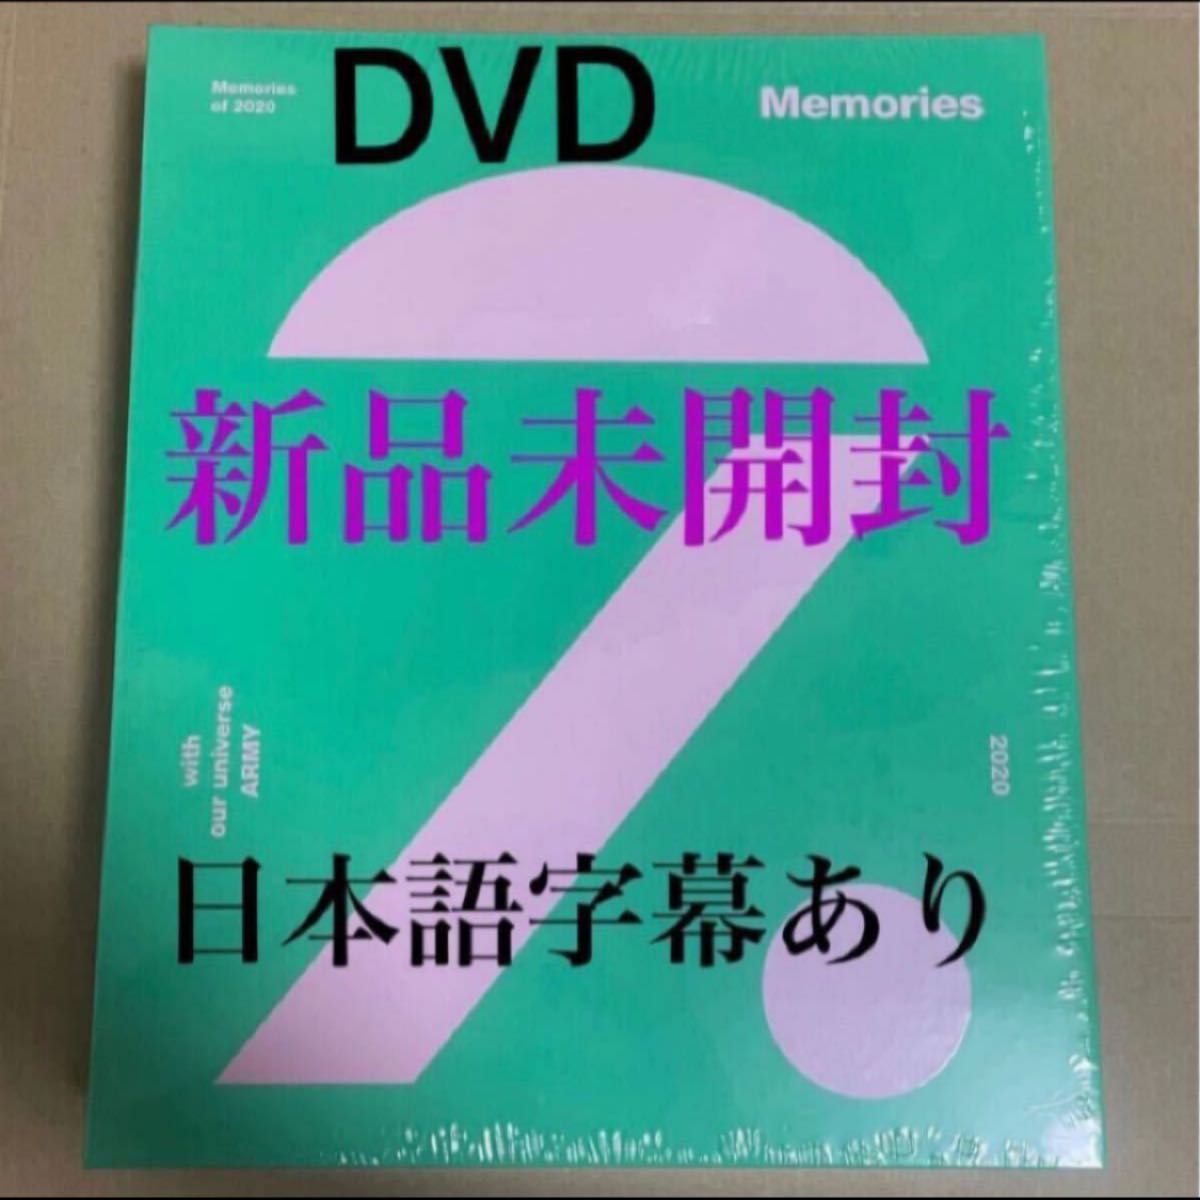 DVD】BTS memories of 2020 - clinicaortosan.com